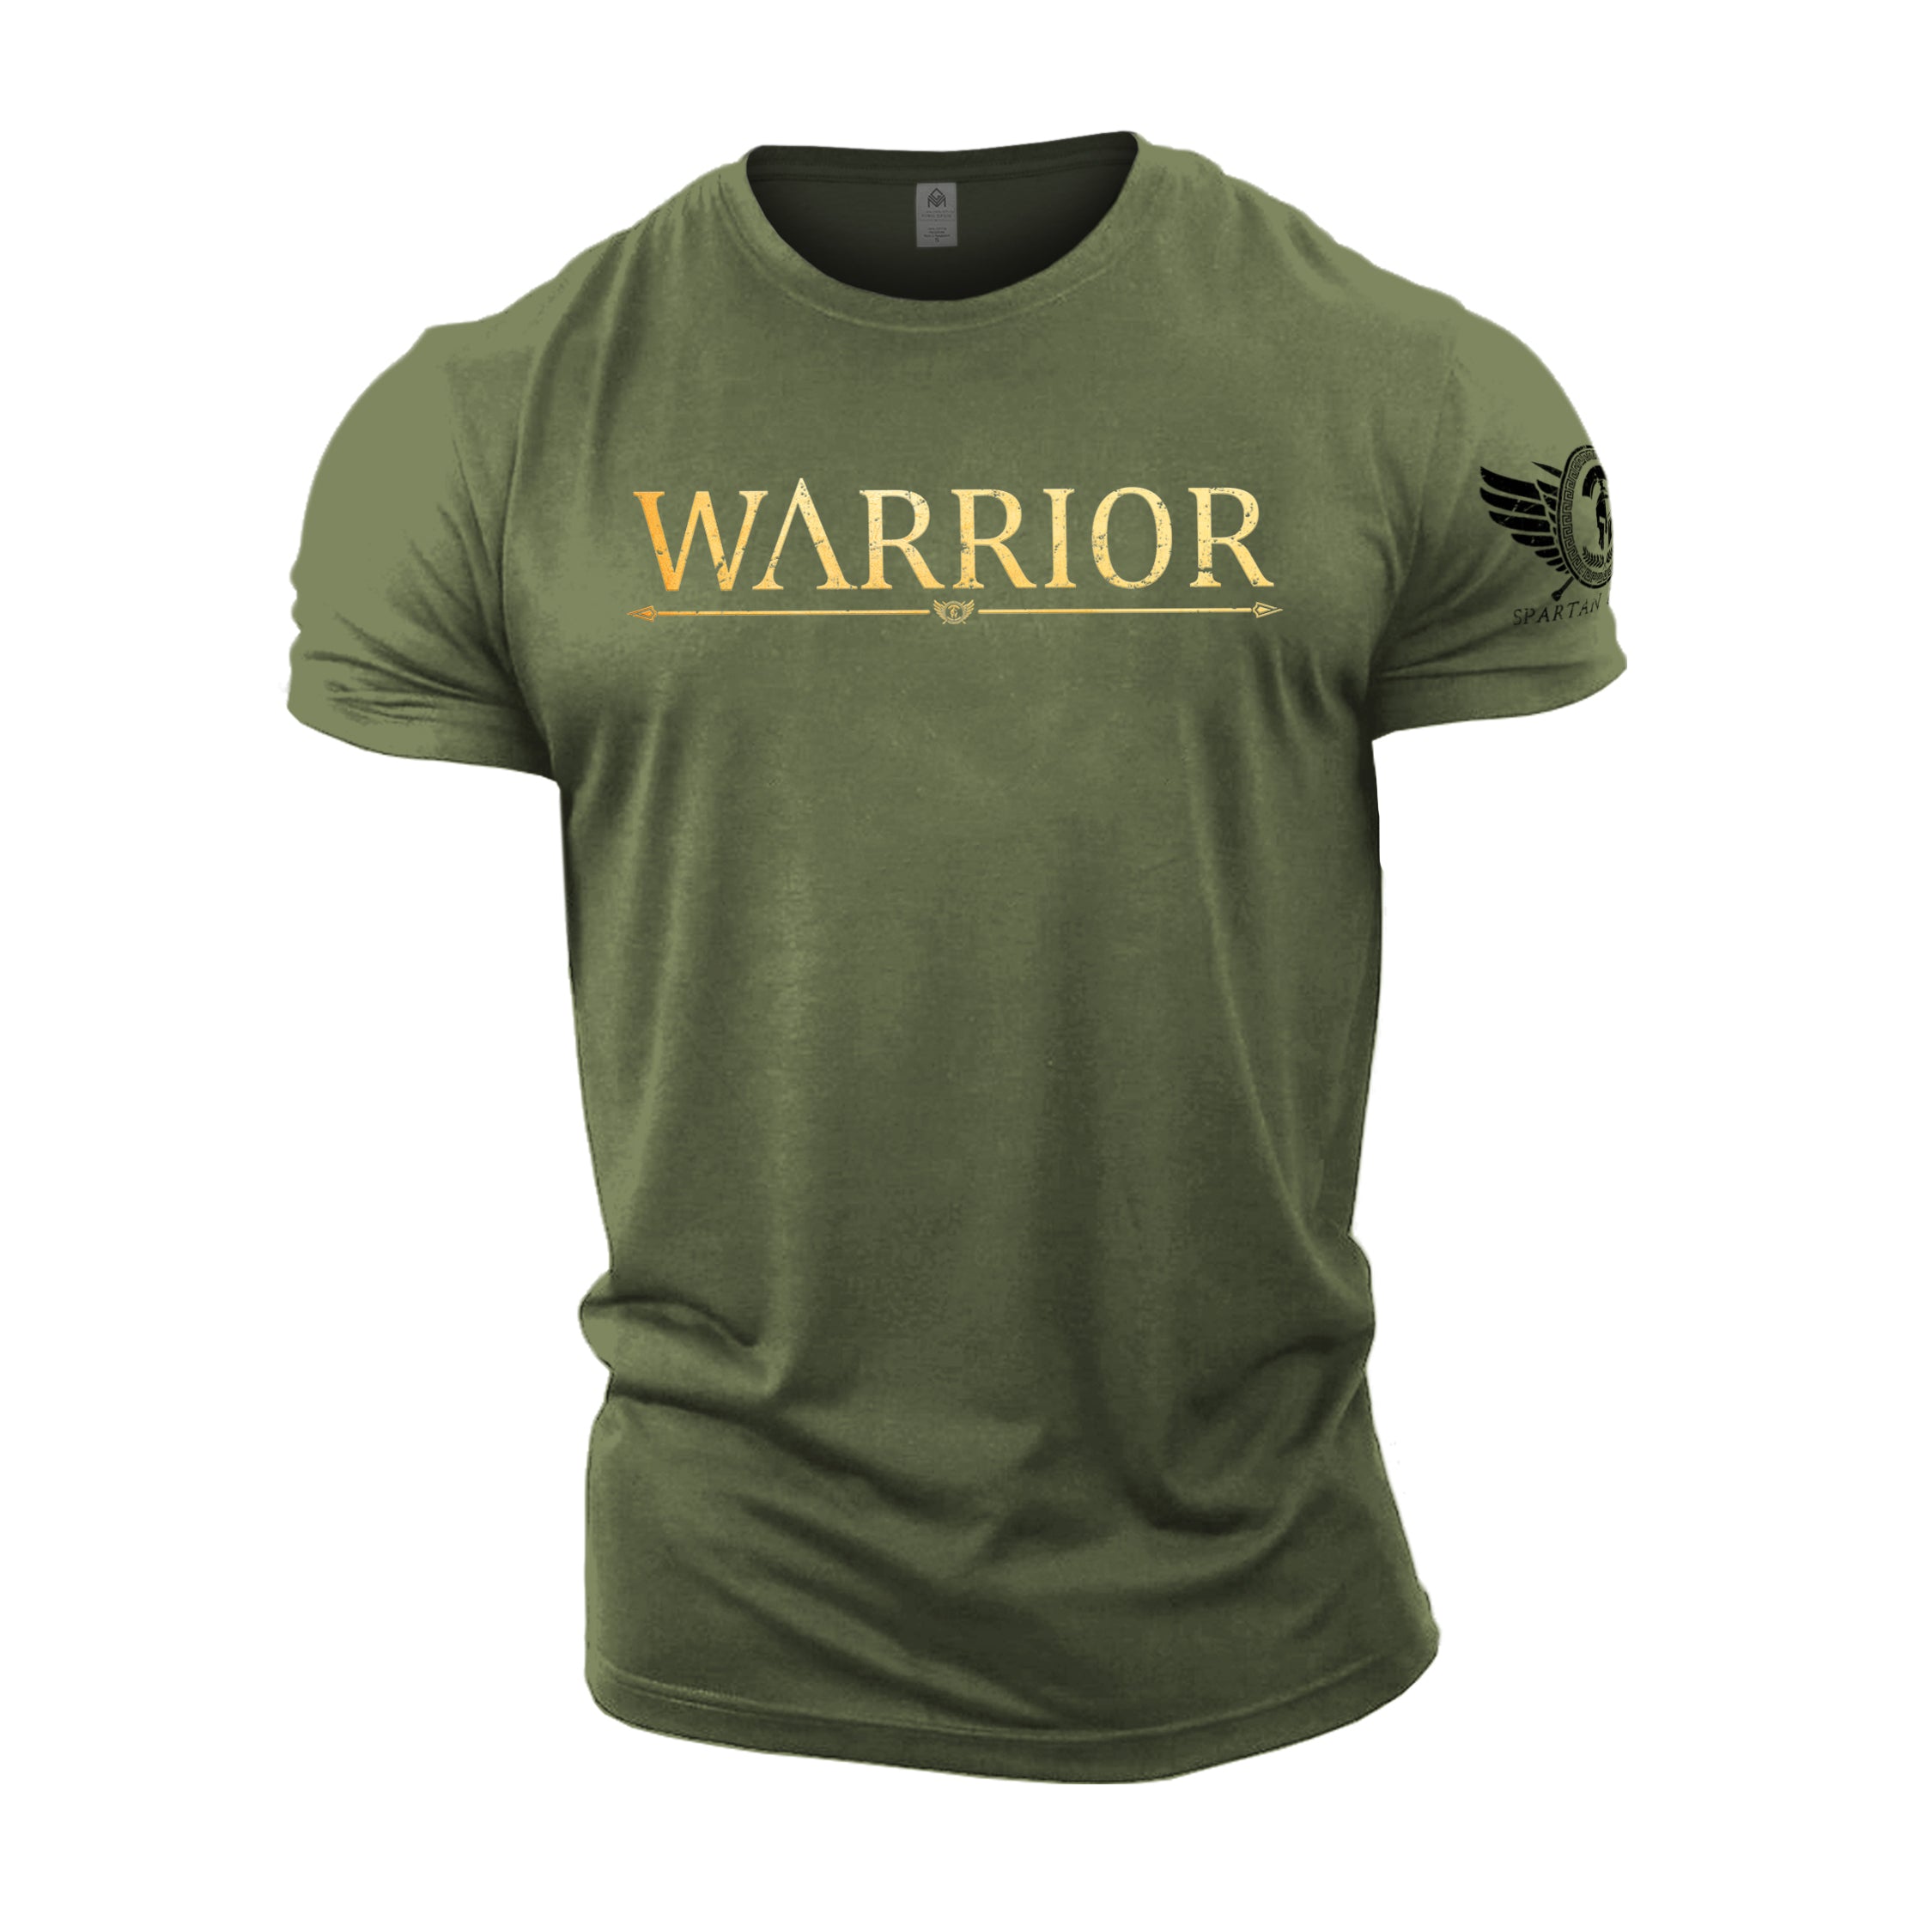 Warrior Gold - Spartan Forged - Gym T-Shirt